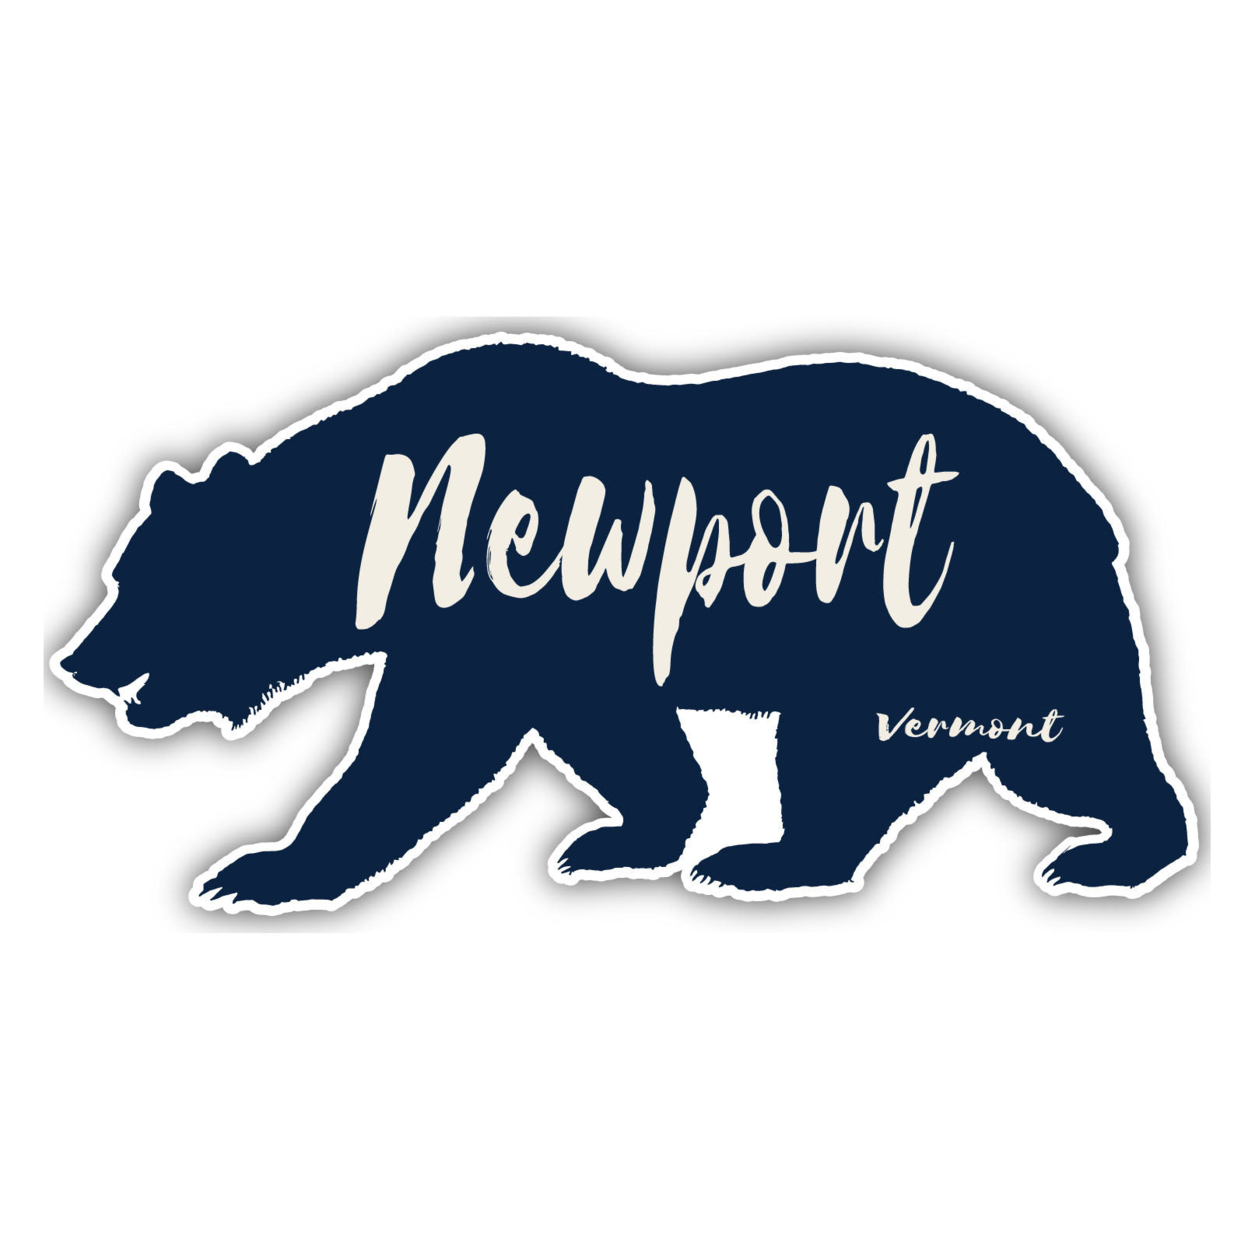 Newport Vermont Souvenir Decorative Stickers (Choose Theme And Size) - Single Unit, 4-Inch, Bear